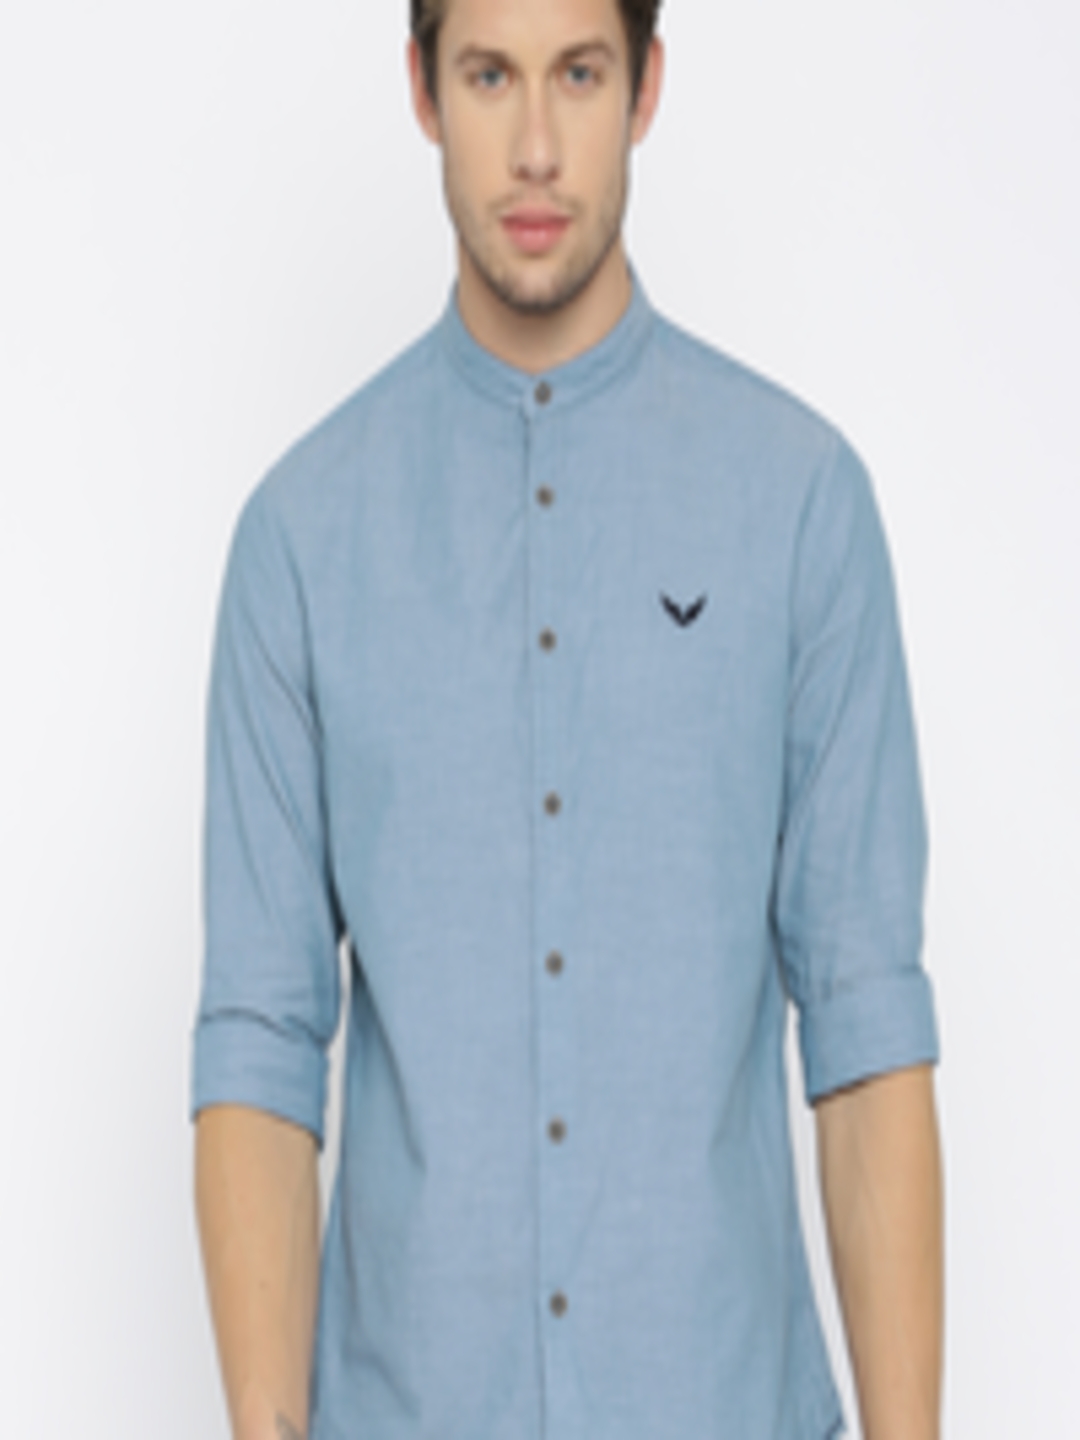 Buy URBAN EAGLE By Pantaloons Men Blue Slim Fit Solid Casual Shirt ...